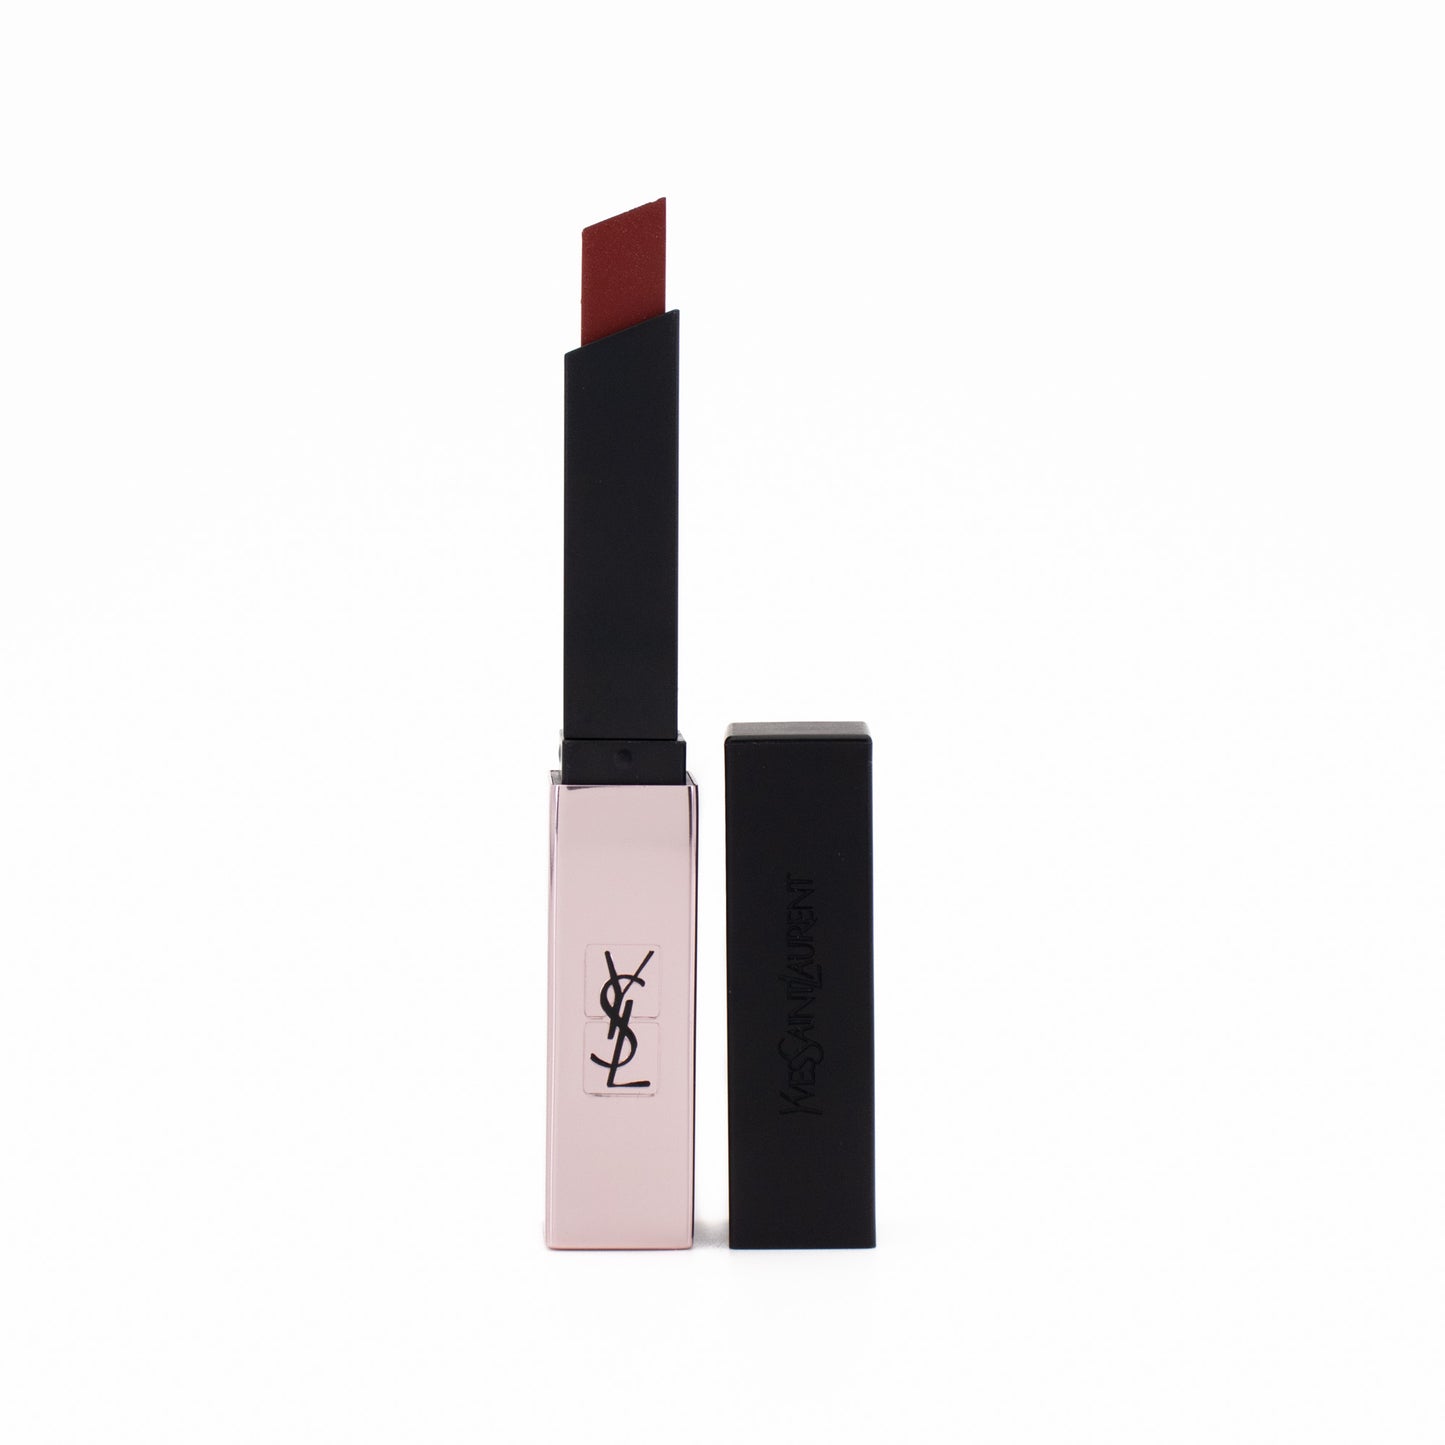 YSL The Slim Glow Matte Lipstick 2.1g 202 Insurgent Red - Imperfect Box